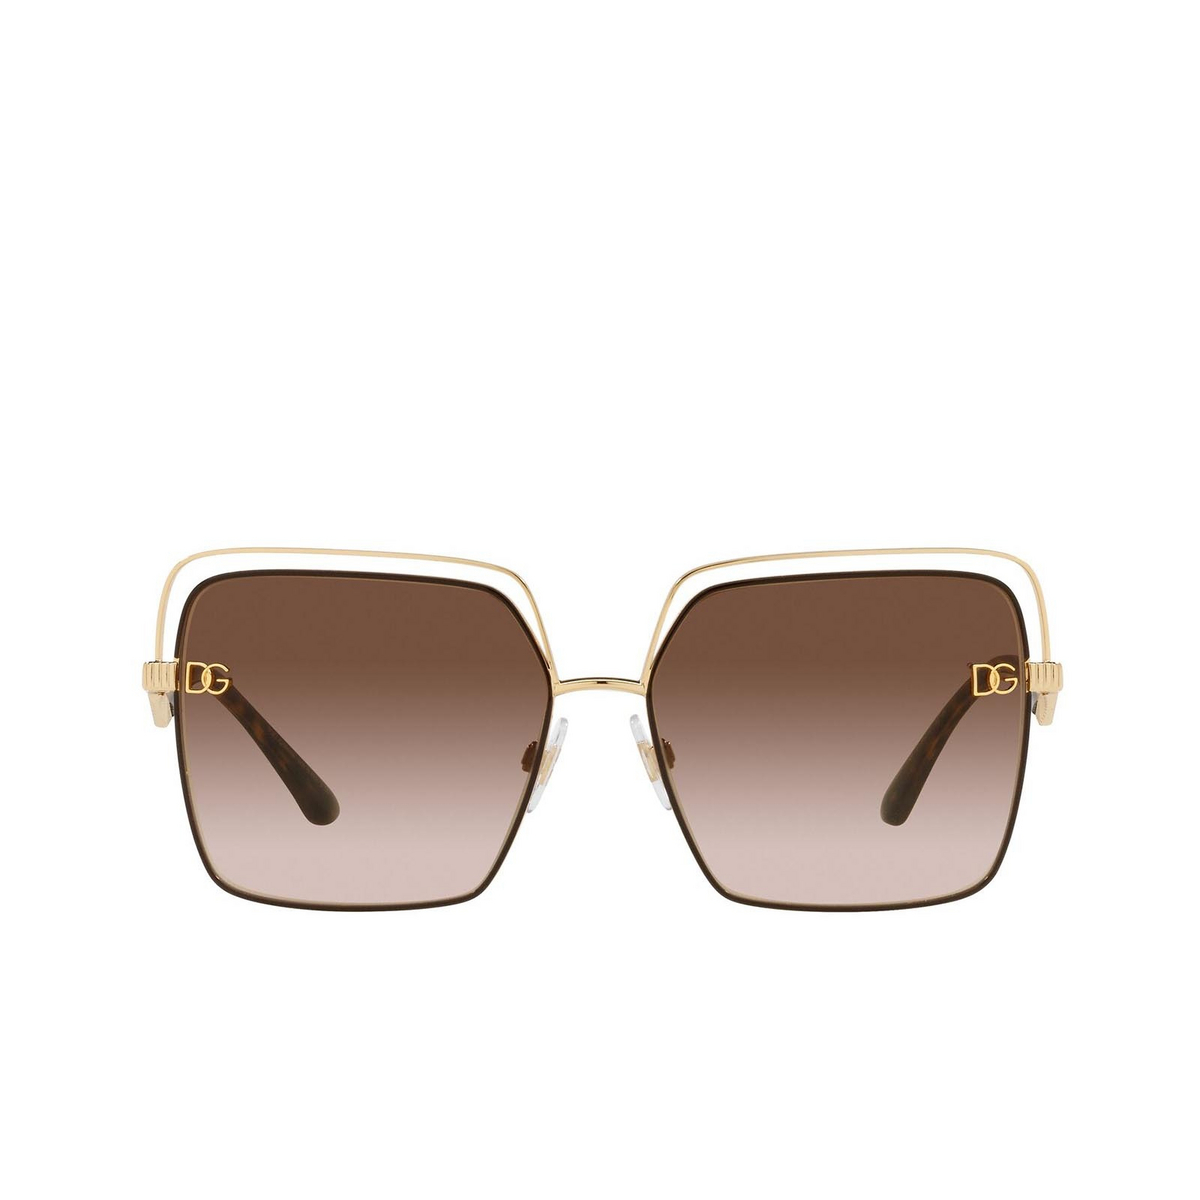 Dolce & Gabbana® Square Sunglasses: DG2268 color 134413 Gold/brown - 1/3